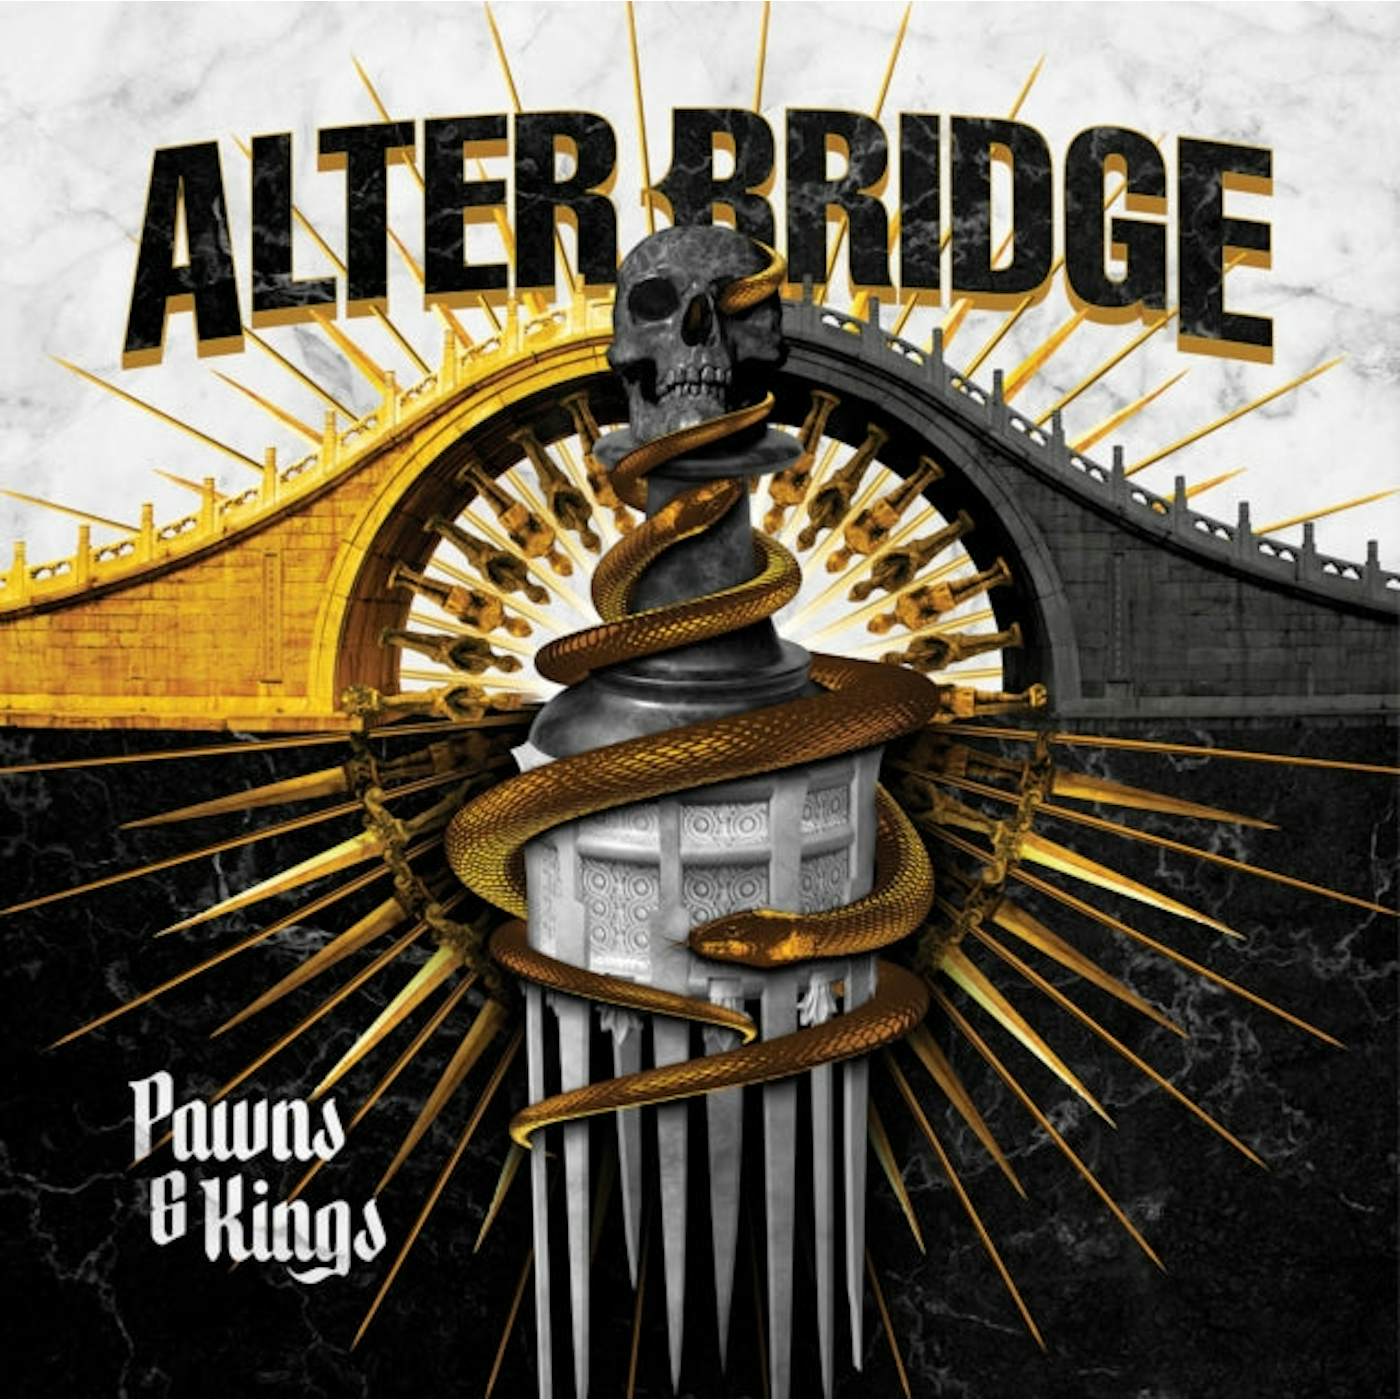 Alter Bridge LP - Pawns & Kings (Vinyl)